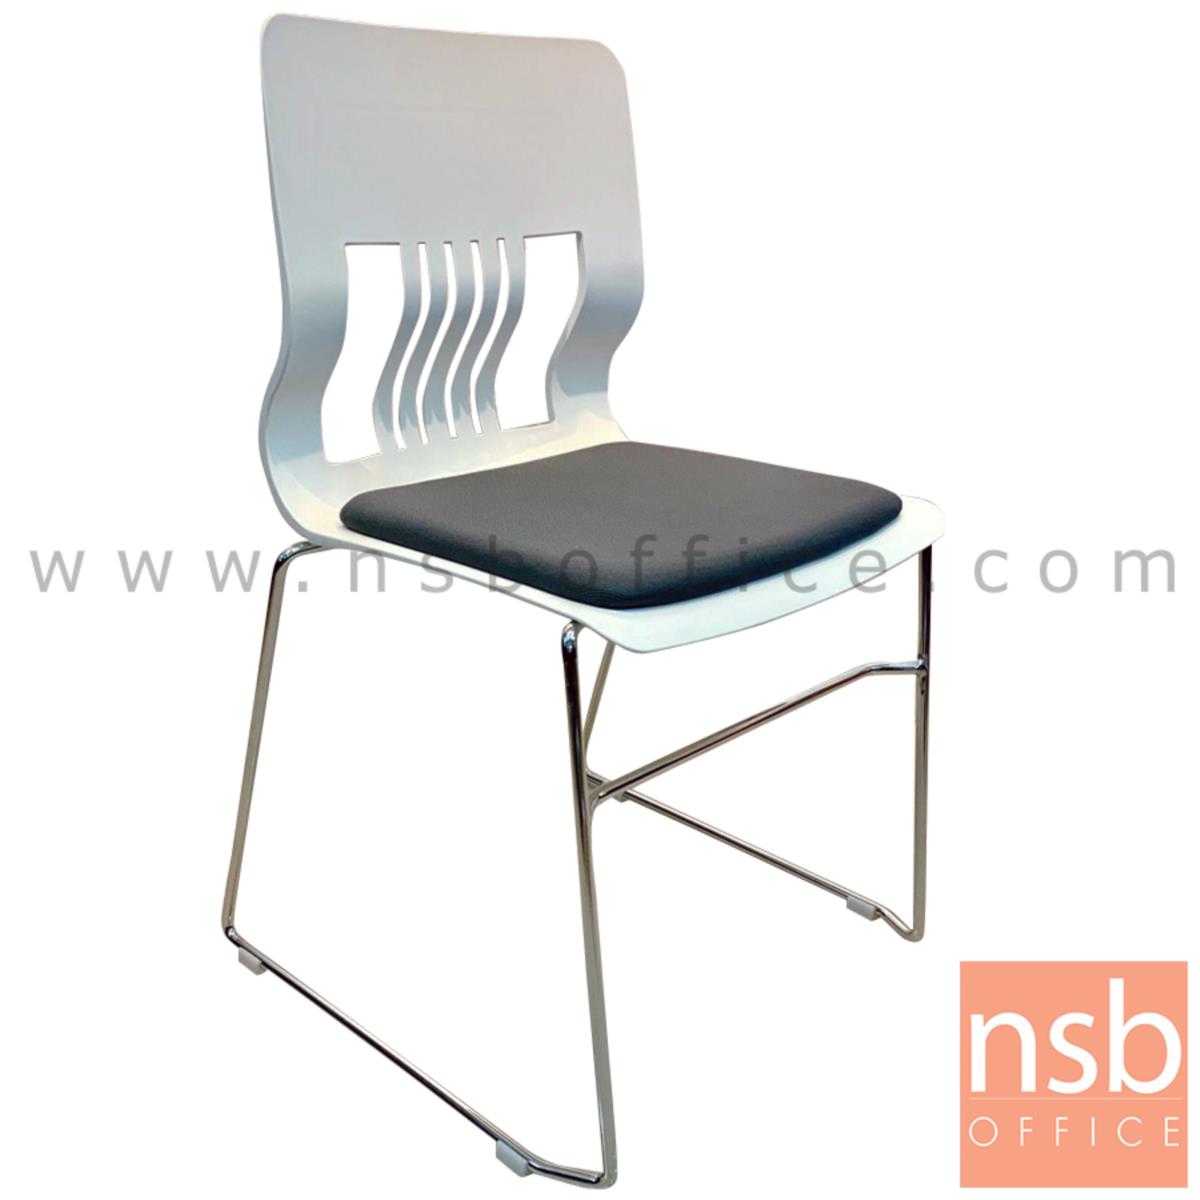 B05A171:เก้าอี้อเนกประสงค์เฟรมโพลี่ รุ่น Wyndham (วินดัม)  ขาเหล็กเพลาตัน ชุบโครเมี่ยม